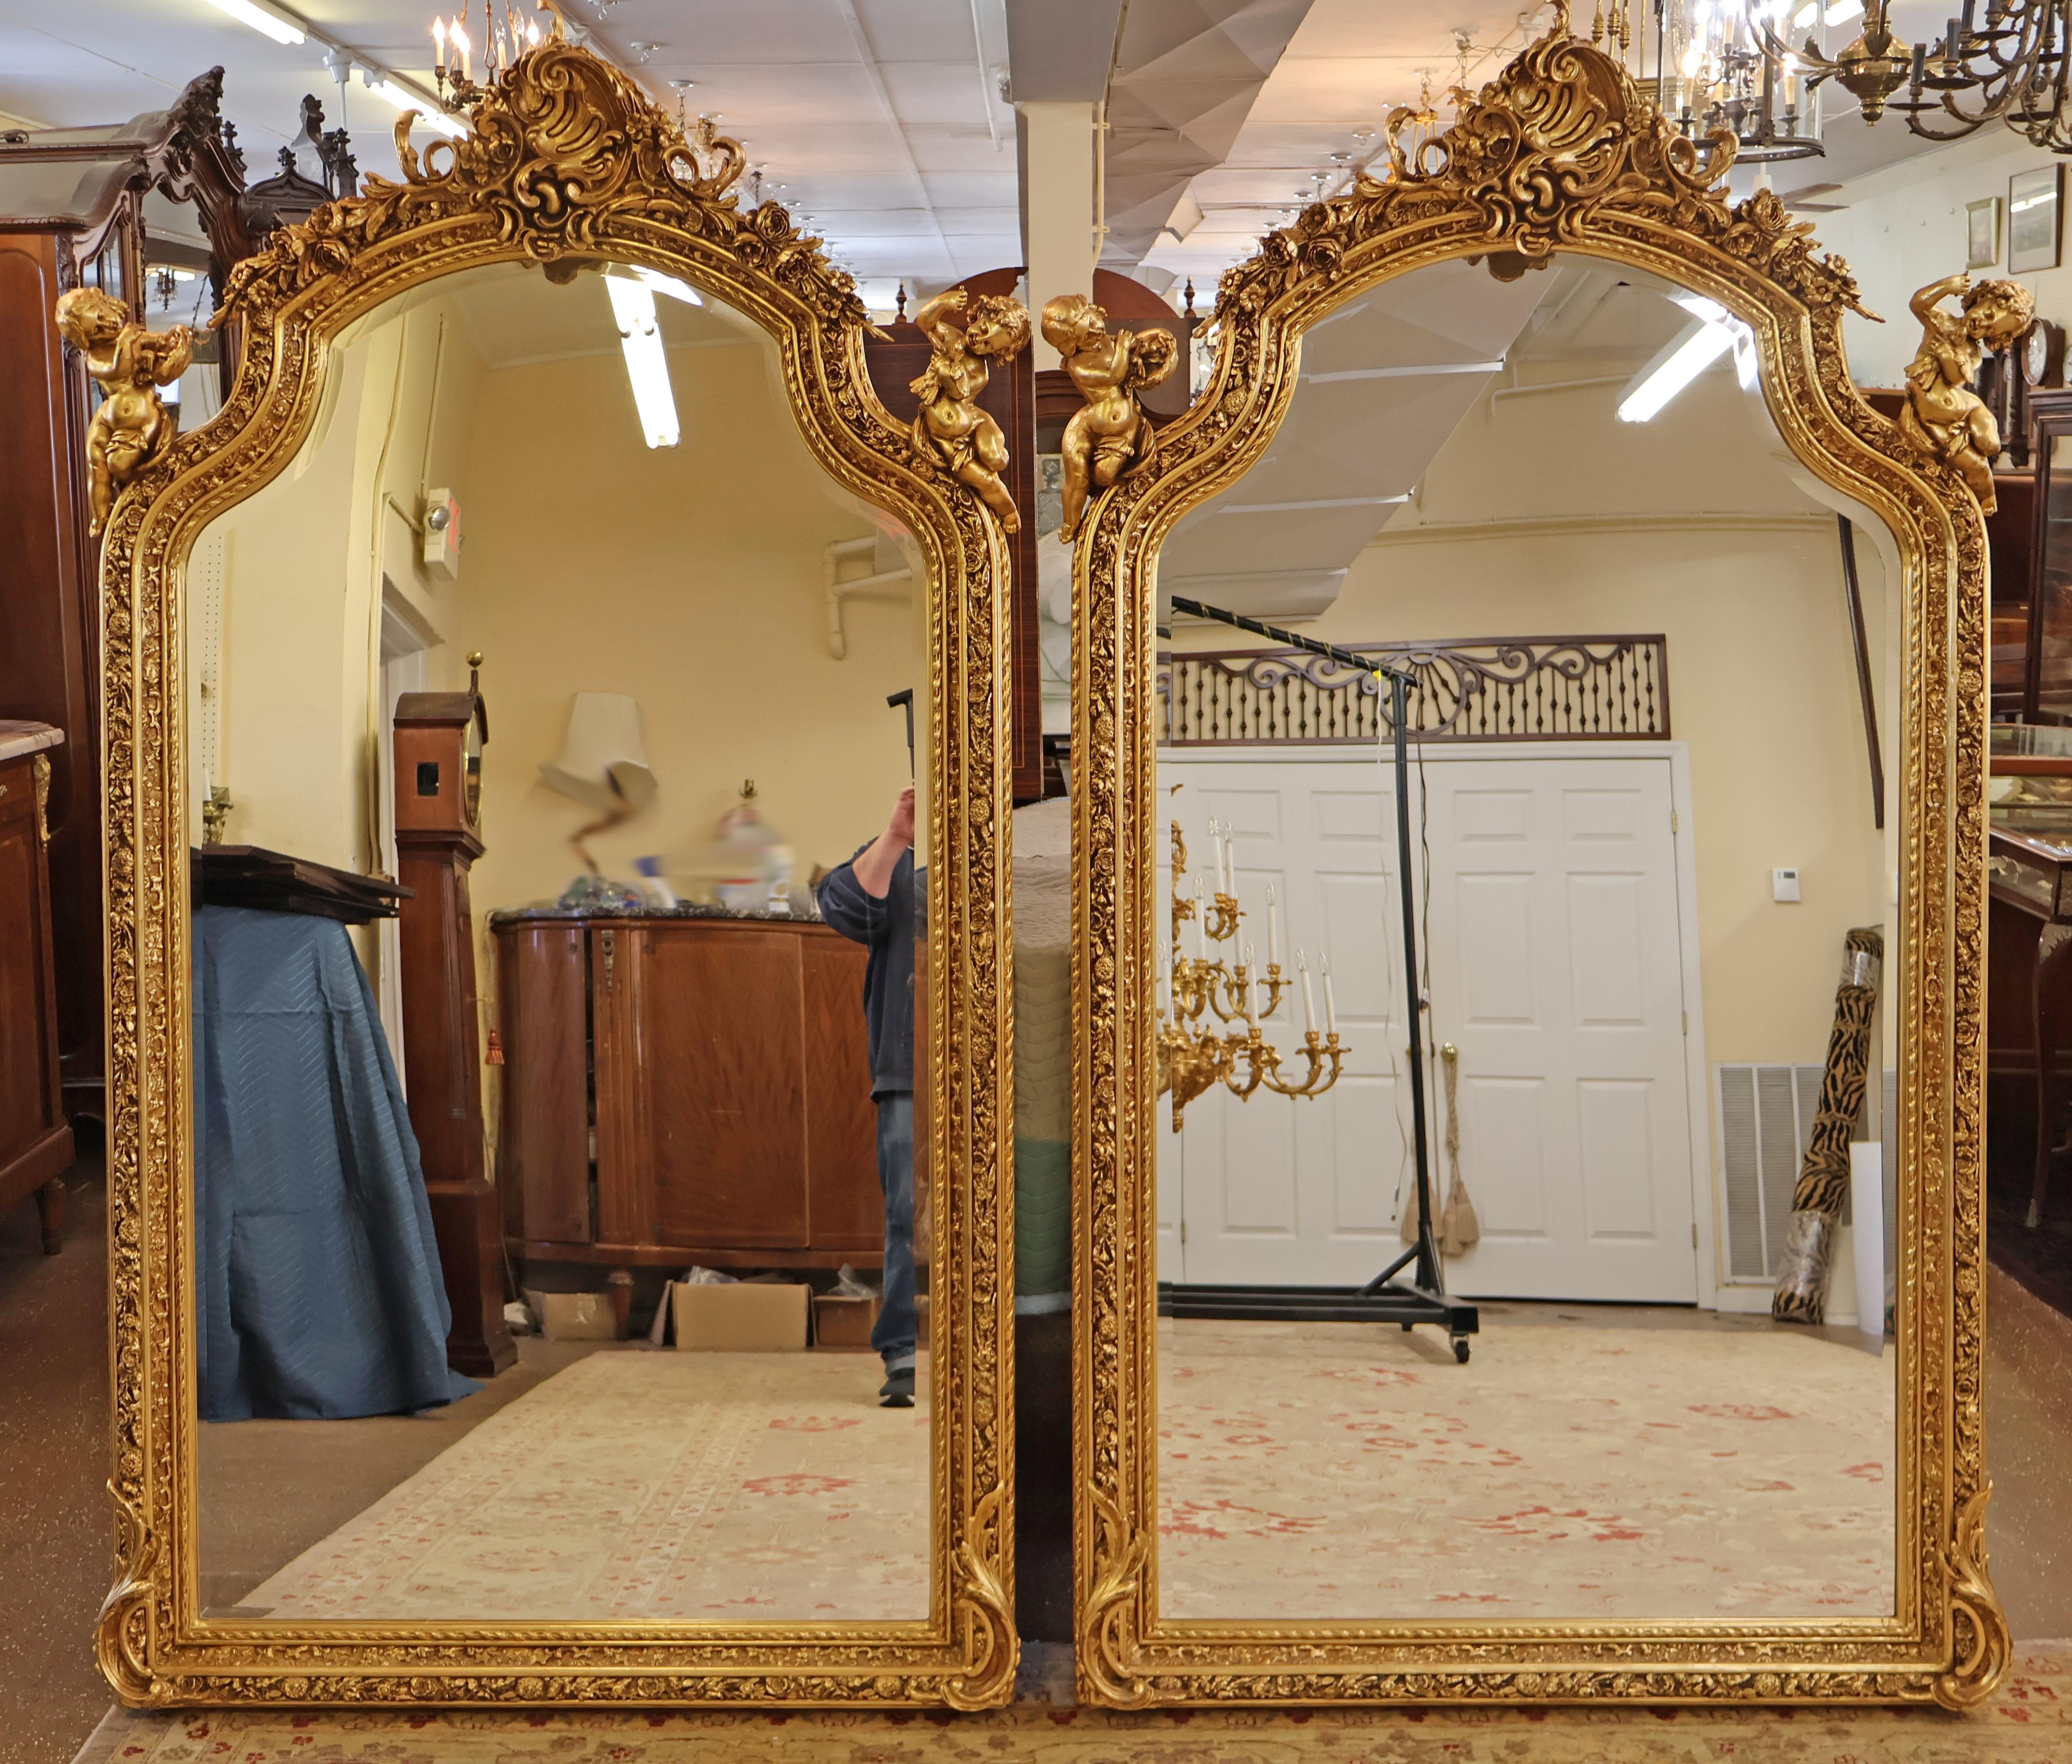 Pair of Monumental Gold Gil Louis XVI French Style Cherub Putti Beveled Mirrors 

Dimensions : 85